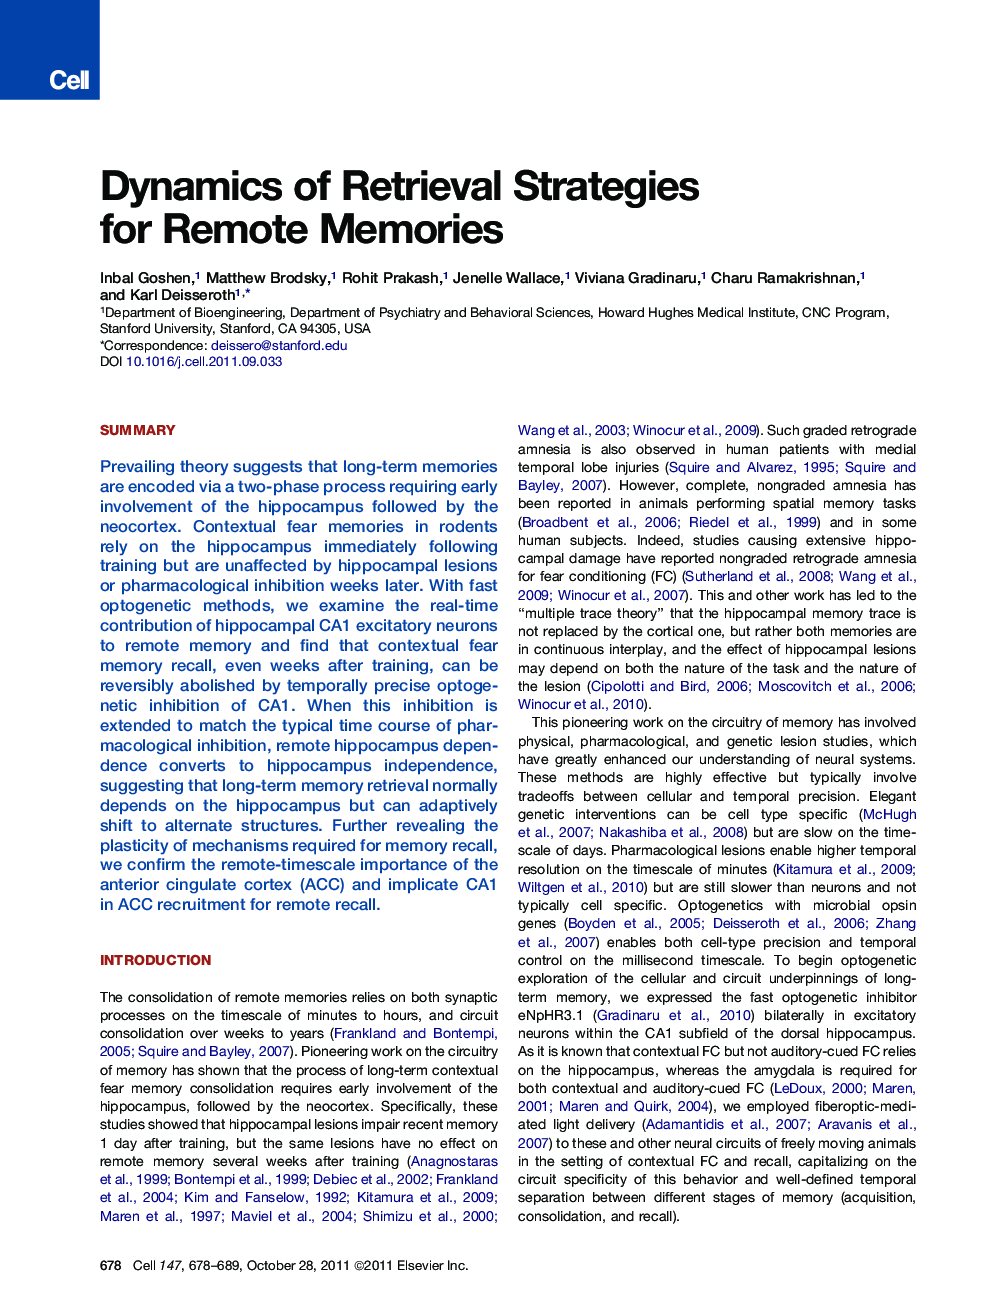 Dynamics of Retrieval Strategies for Remote Memories